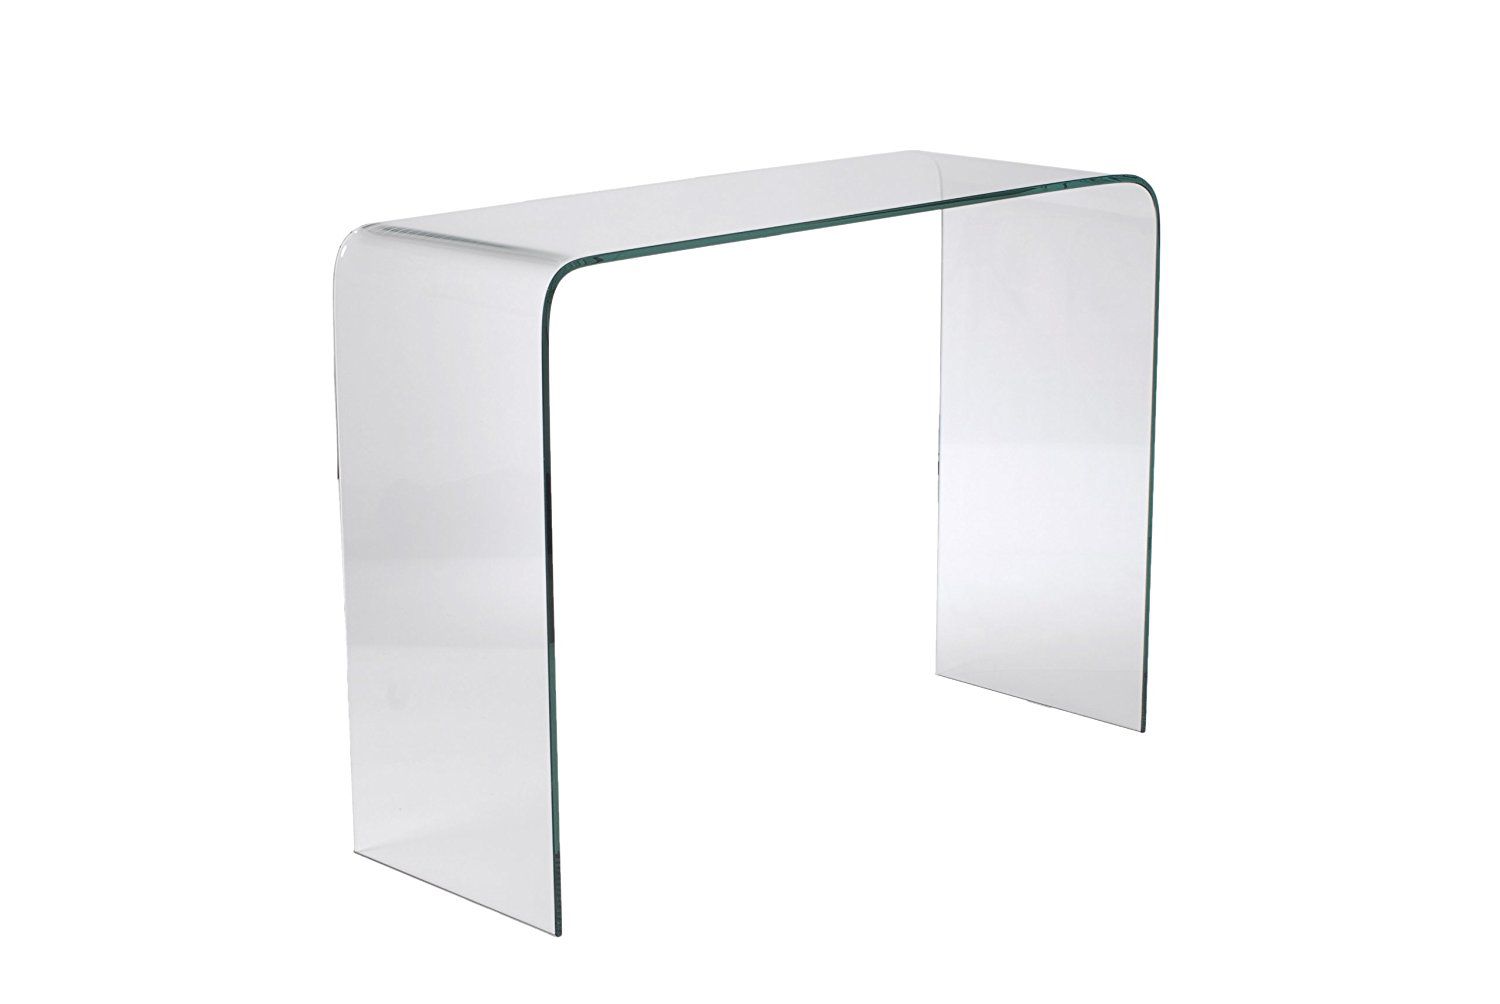 Eurø Style Gita Modern Bent Glass Console Table